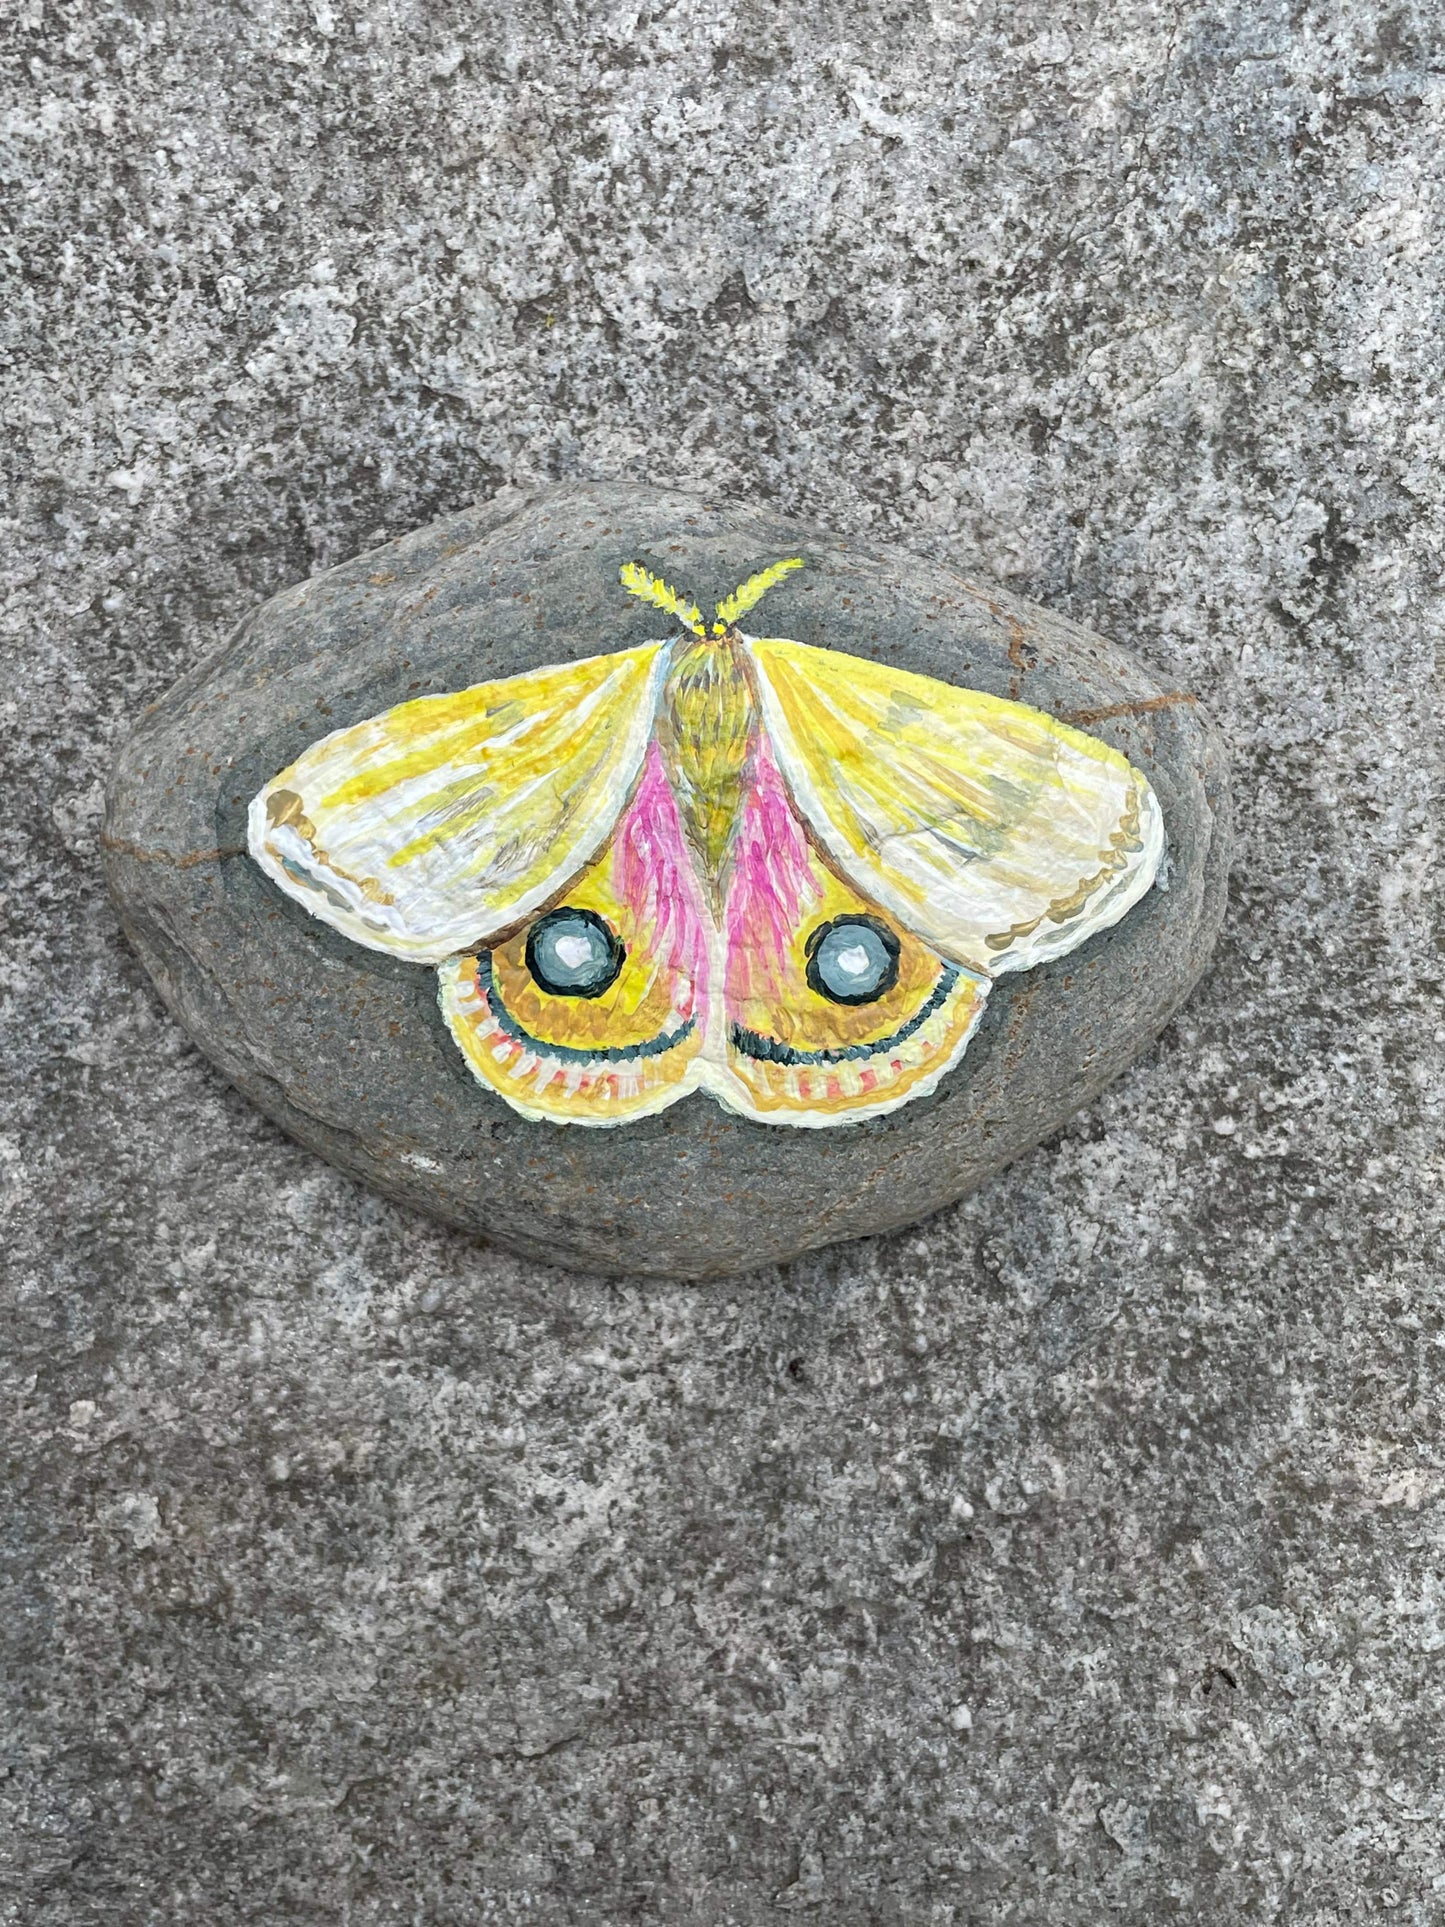 Io Moth Painted Rock